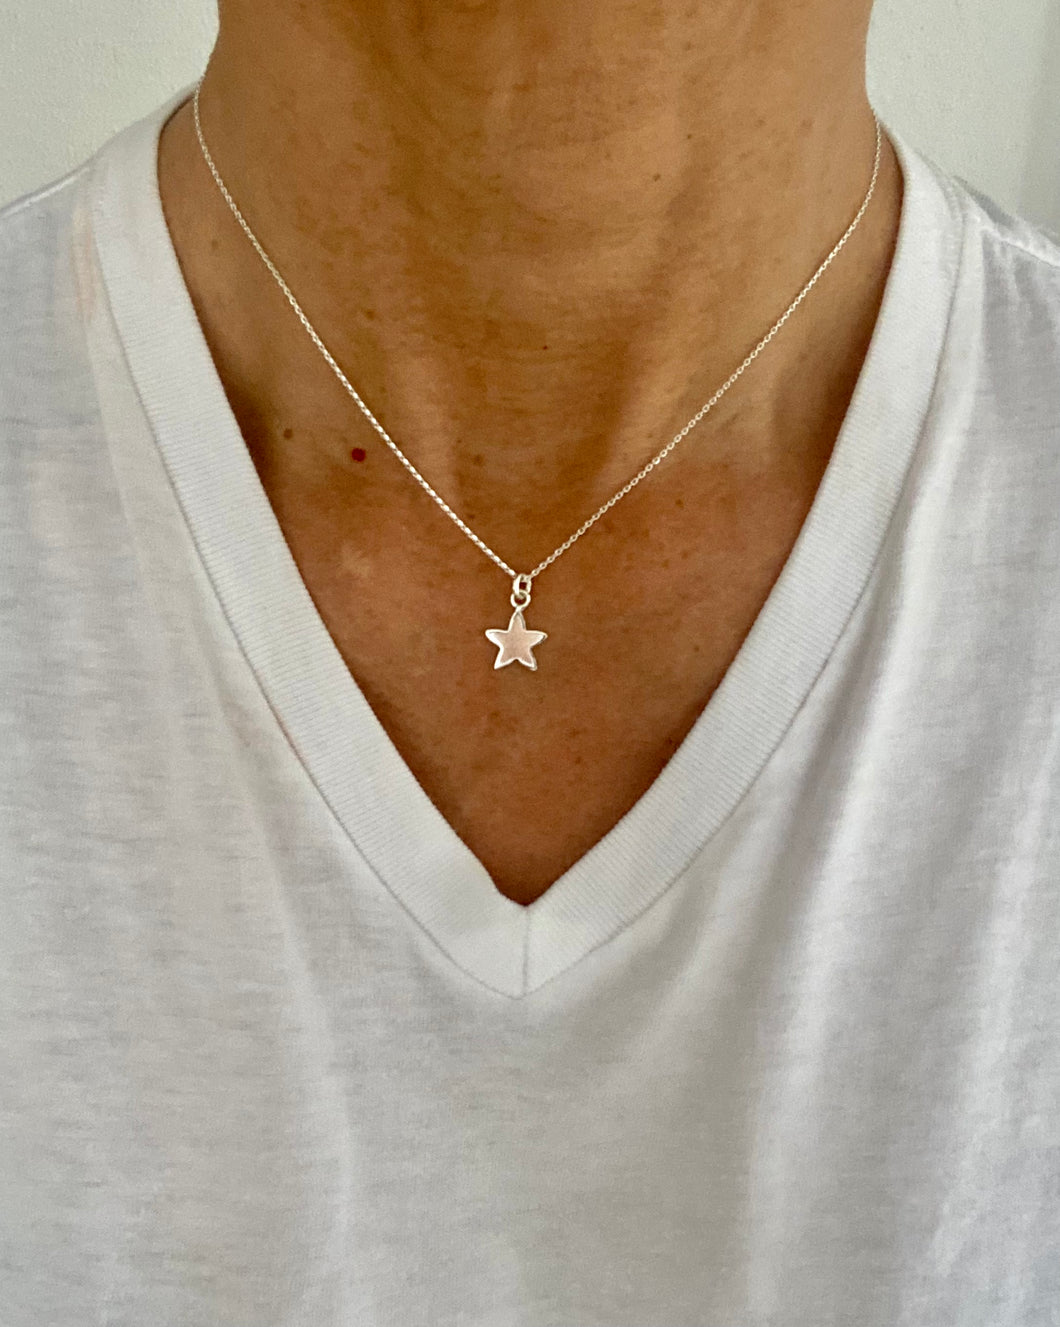 Silverstar necklace